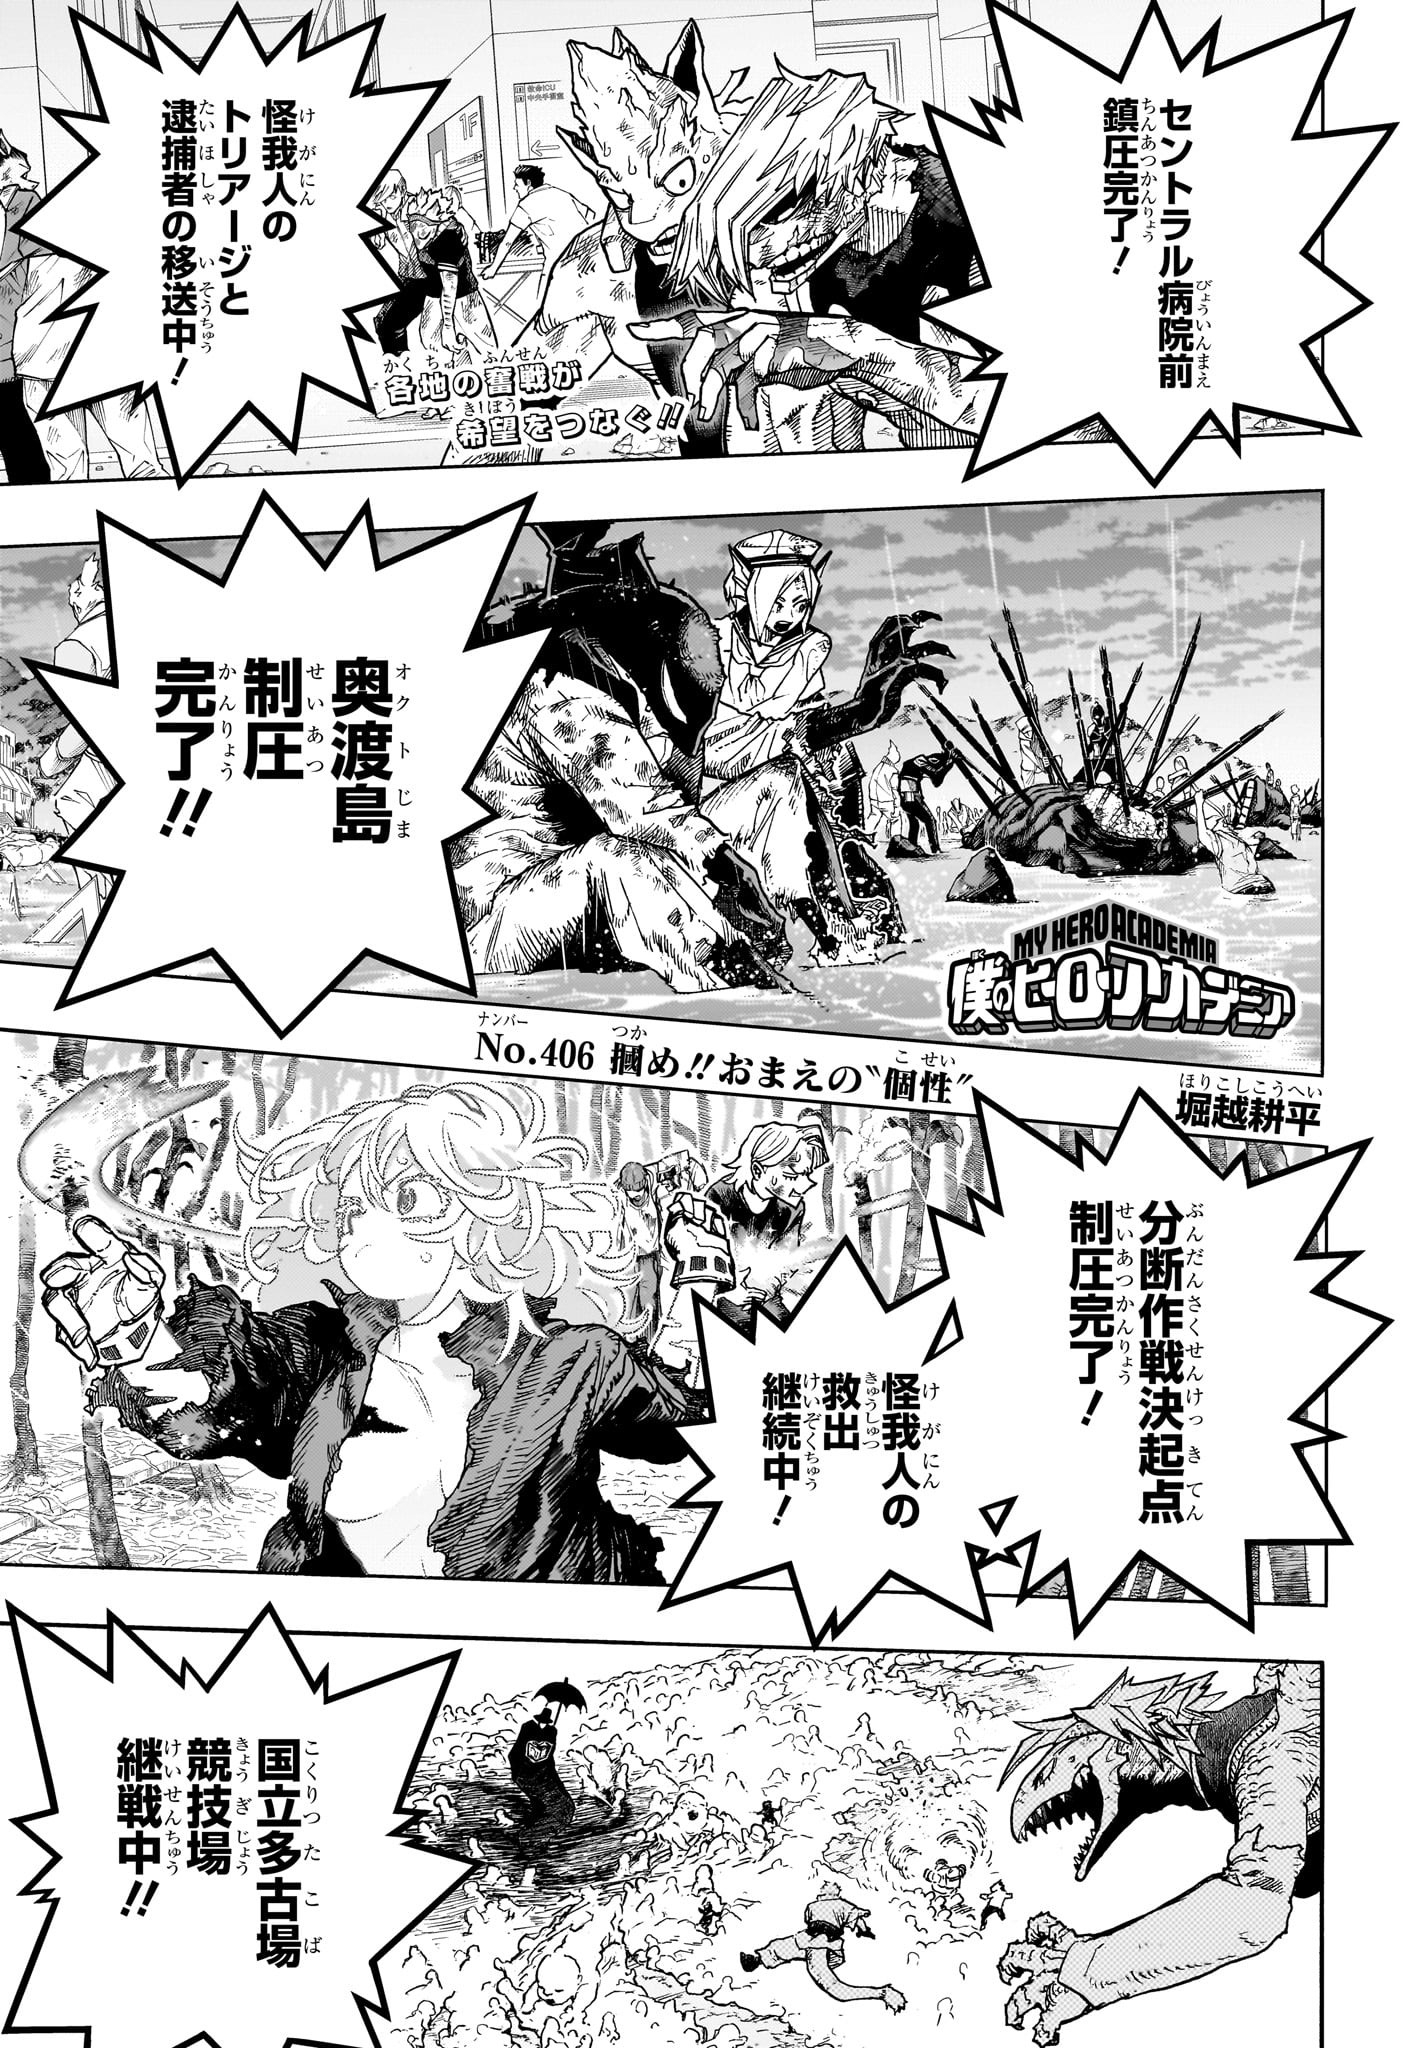 Boku no Hero Academia - Chapter 406 - Page 1